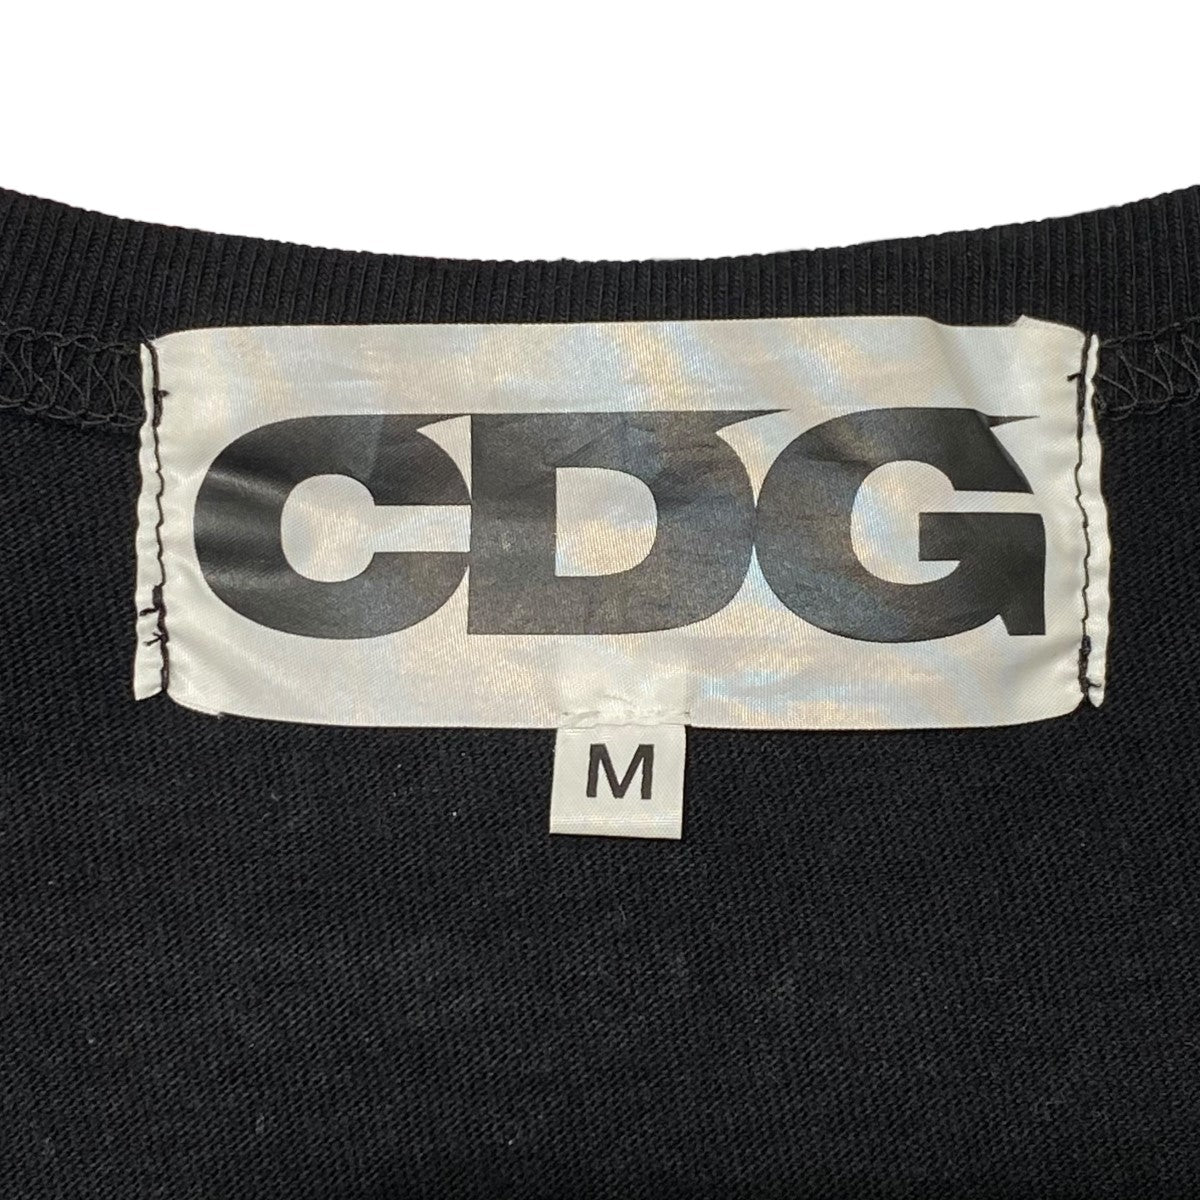 CDG(コムデギャルソン) 袖切替 袖口変形デザインカットソーシャツ SZ 